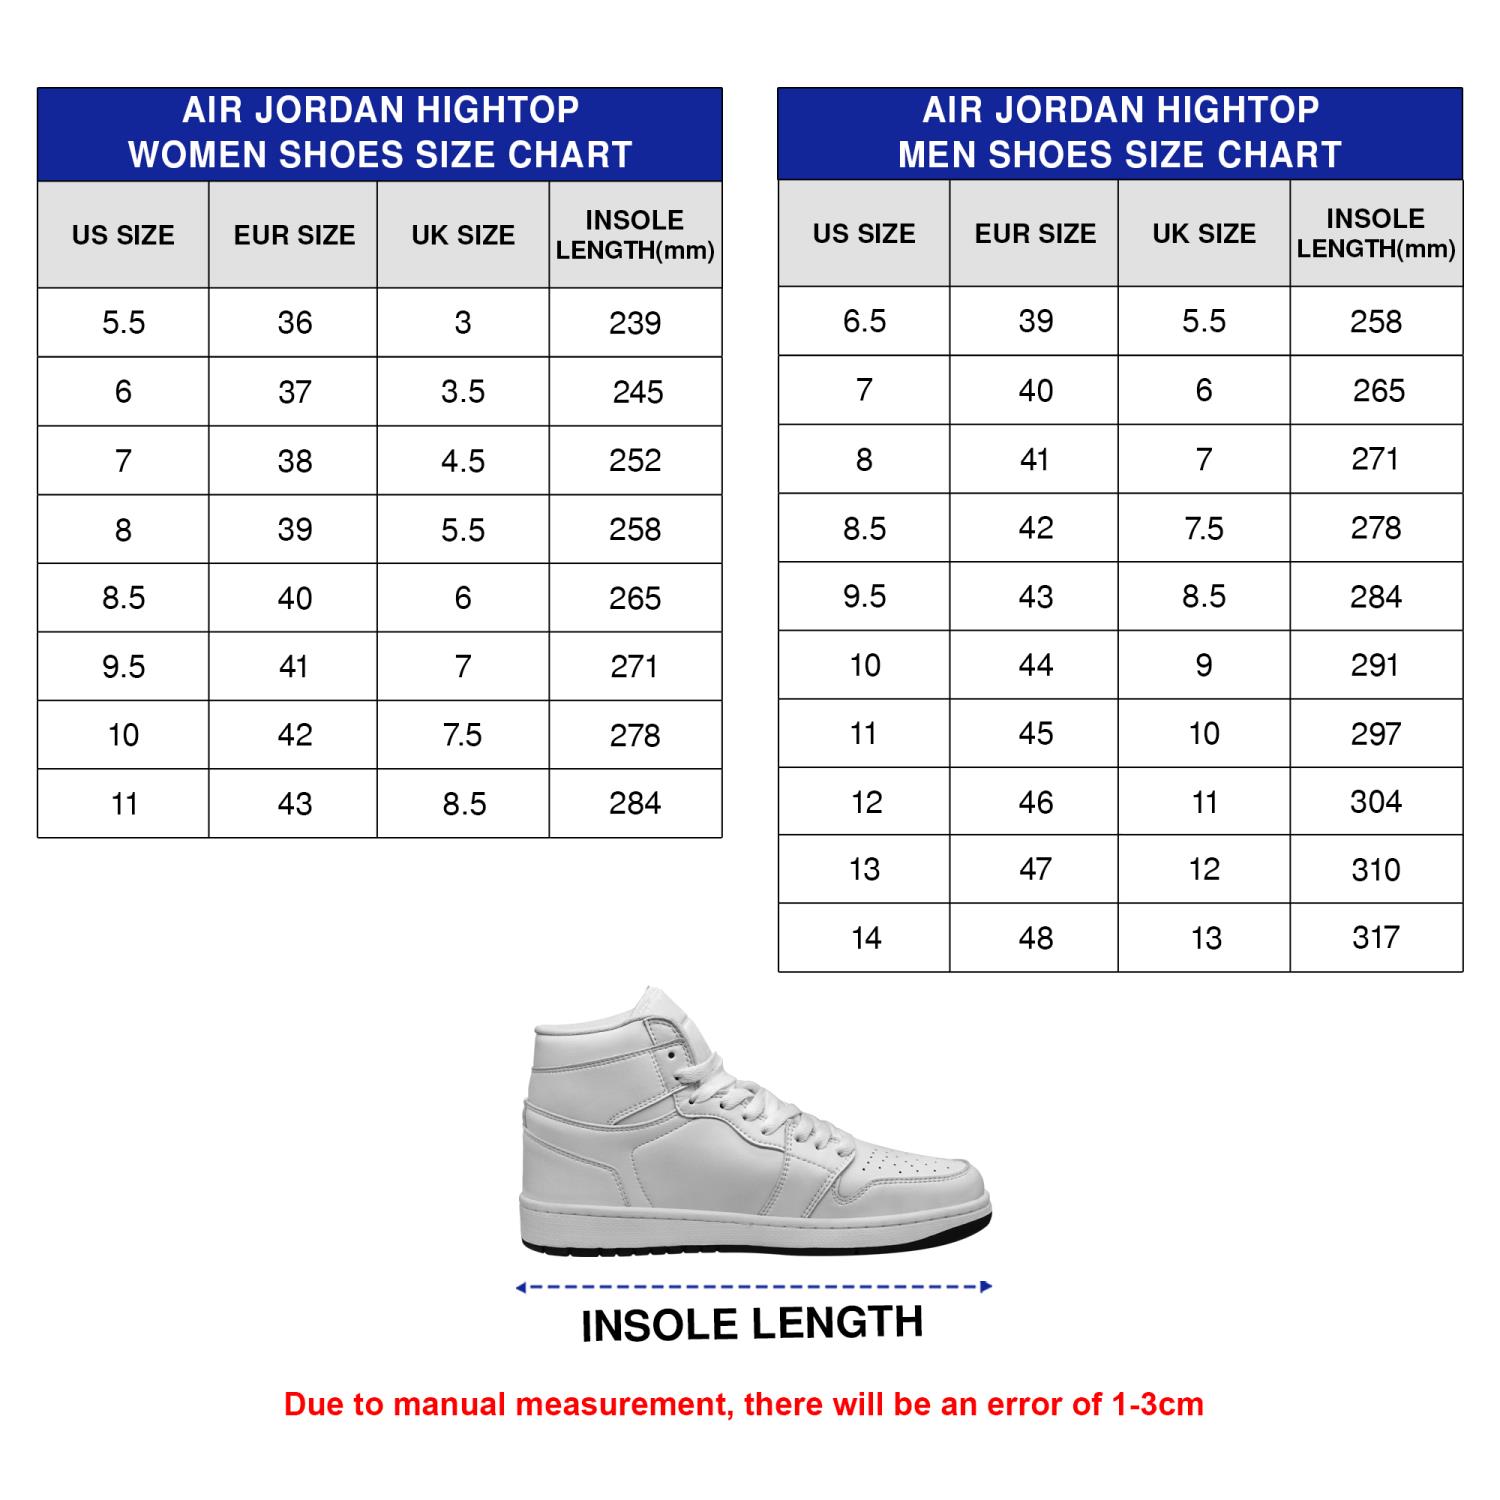 Air Jordan Hightop Size Chart